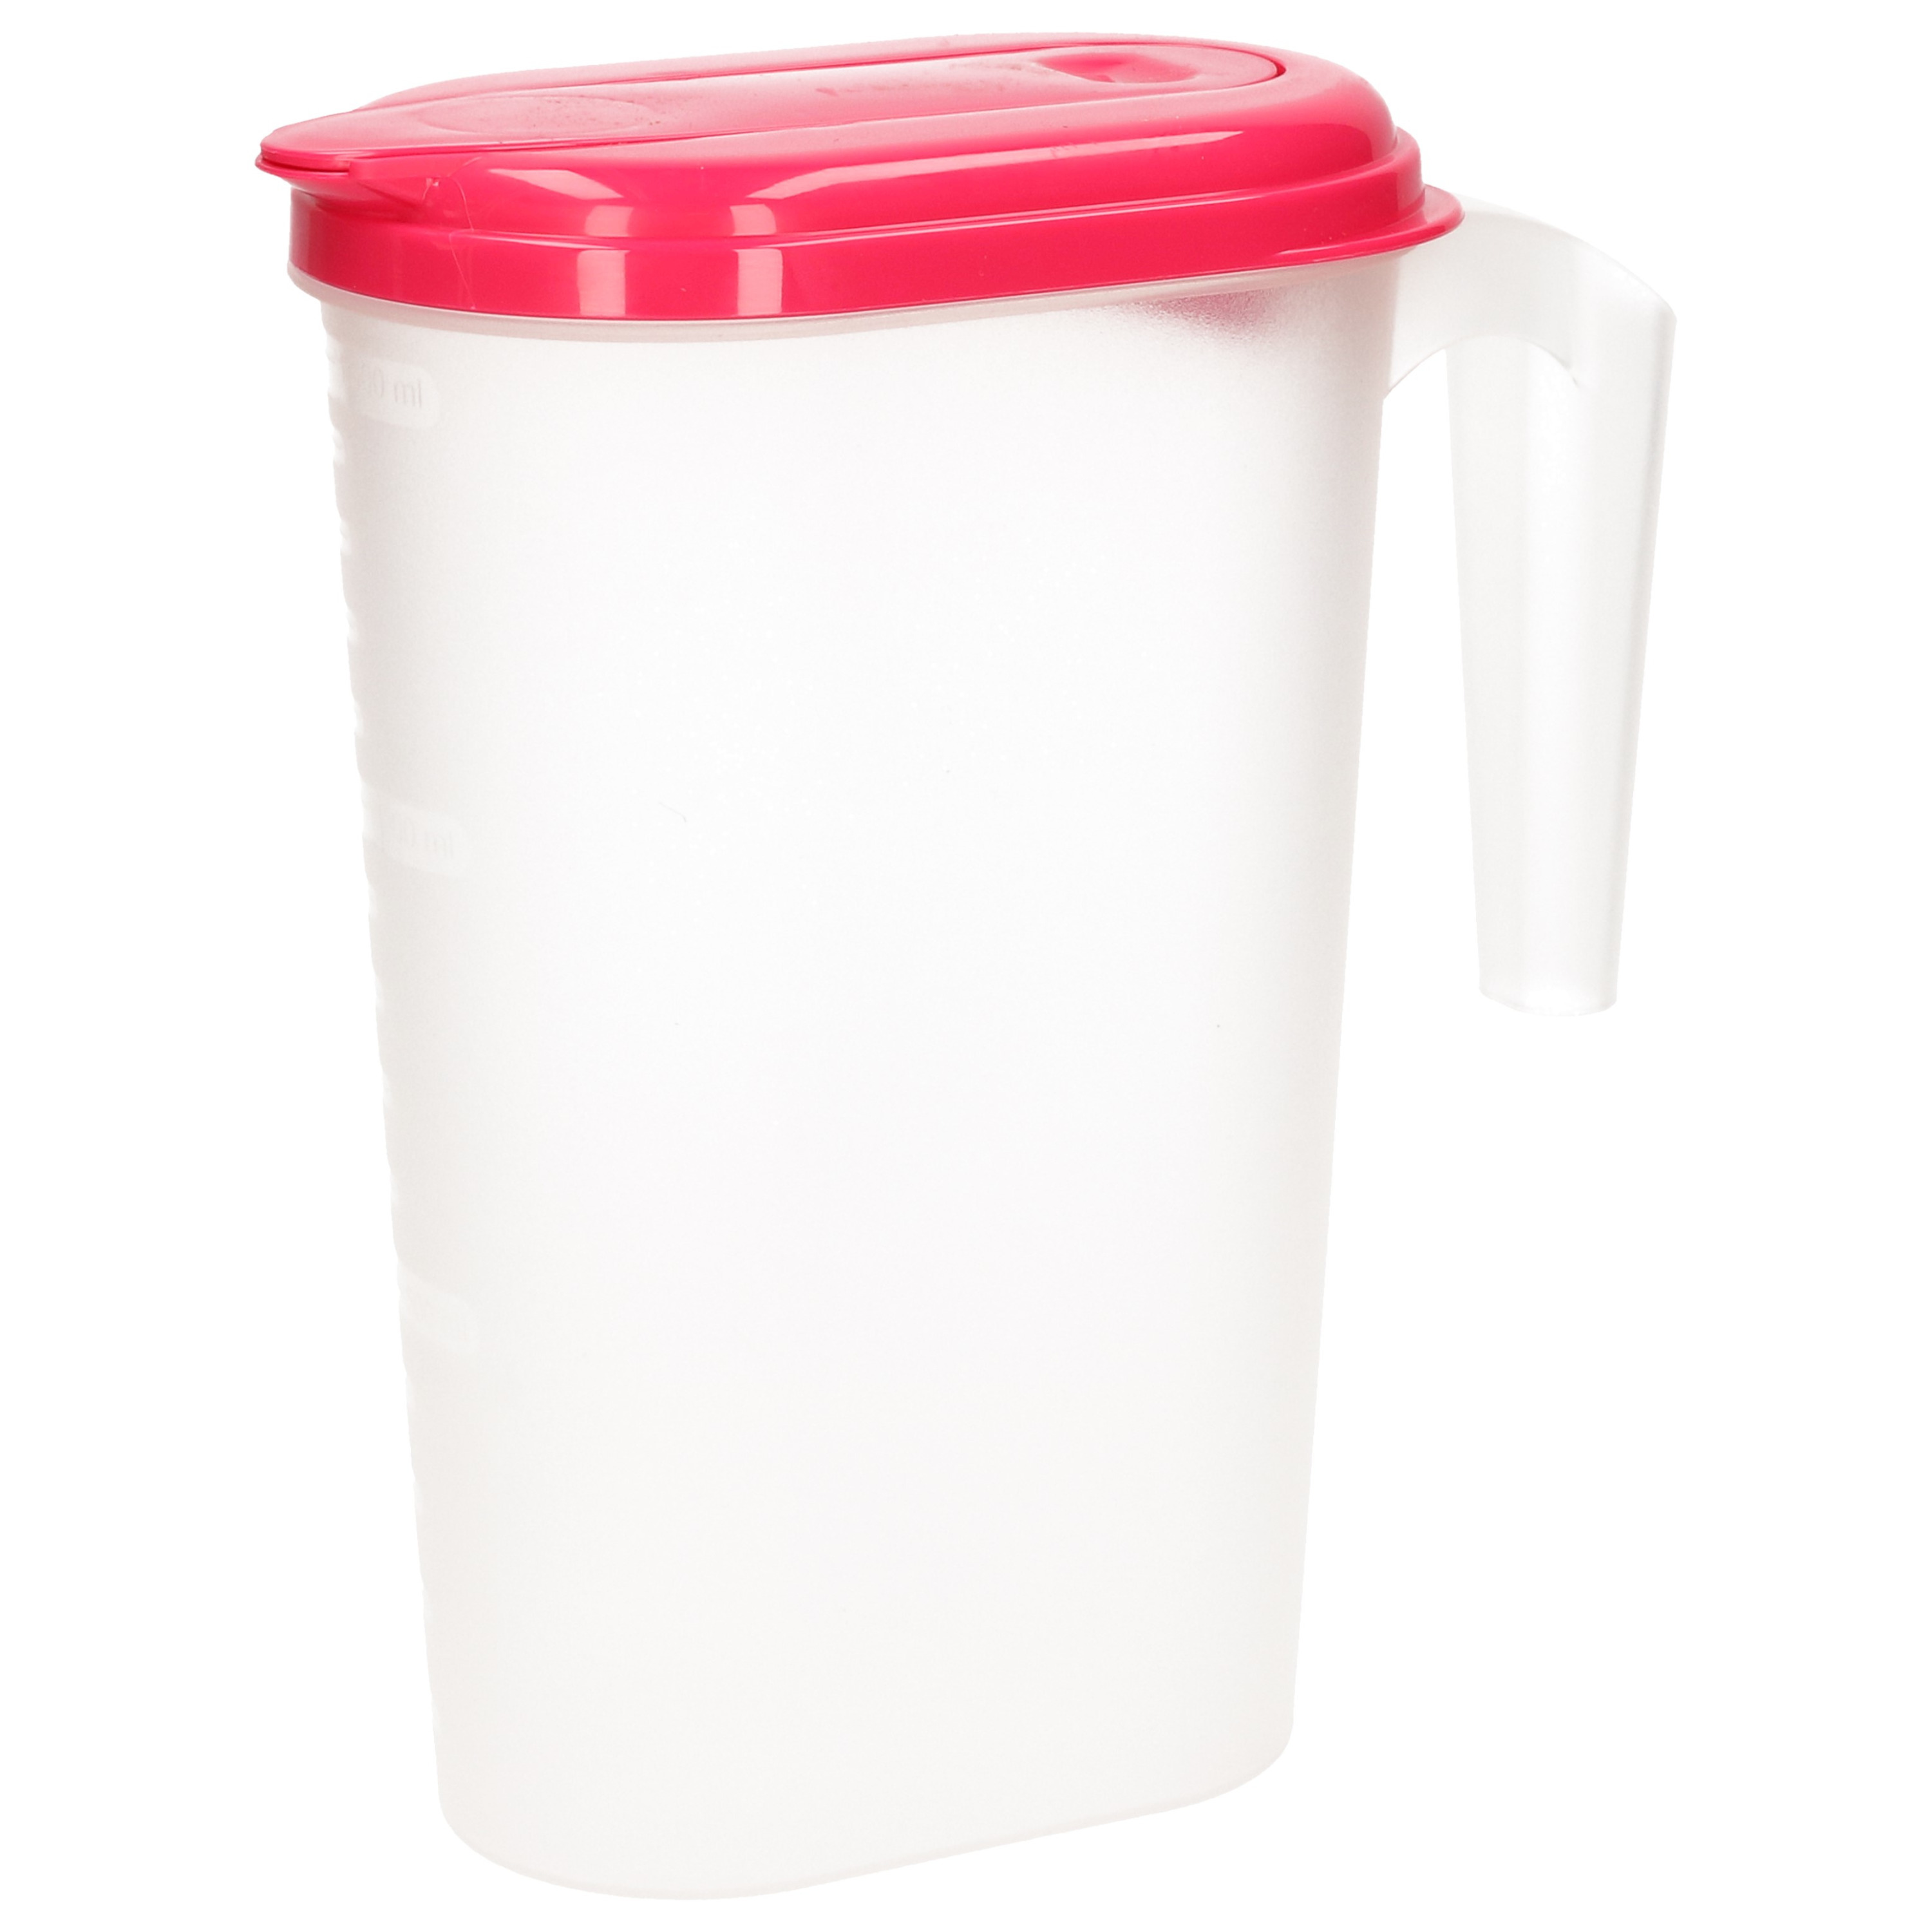 PlasticForte Waterkan/sapkan transparant/fuschia roze met deksel 1.6 liter kunststof -